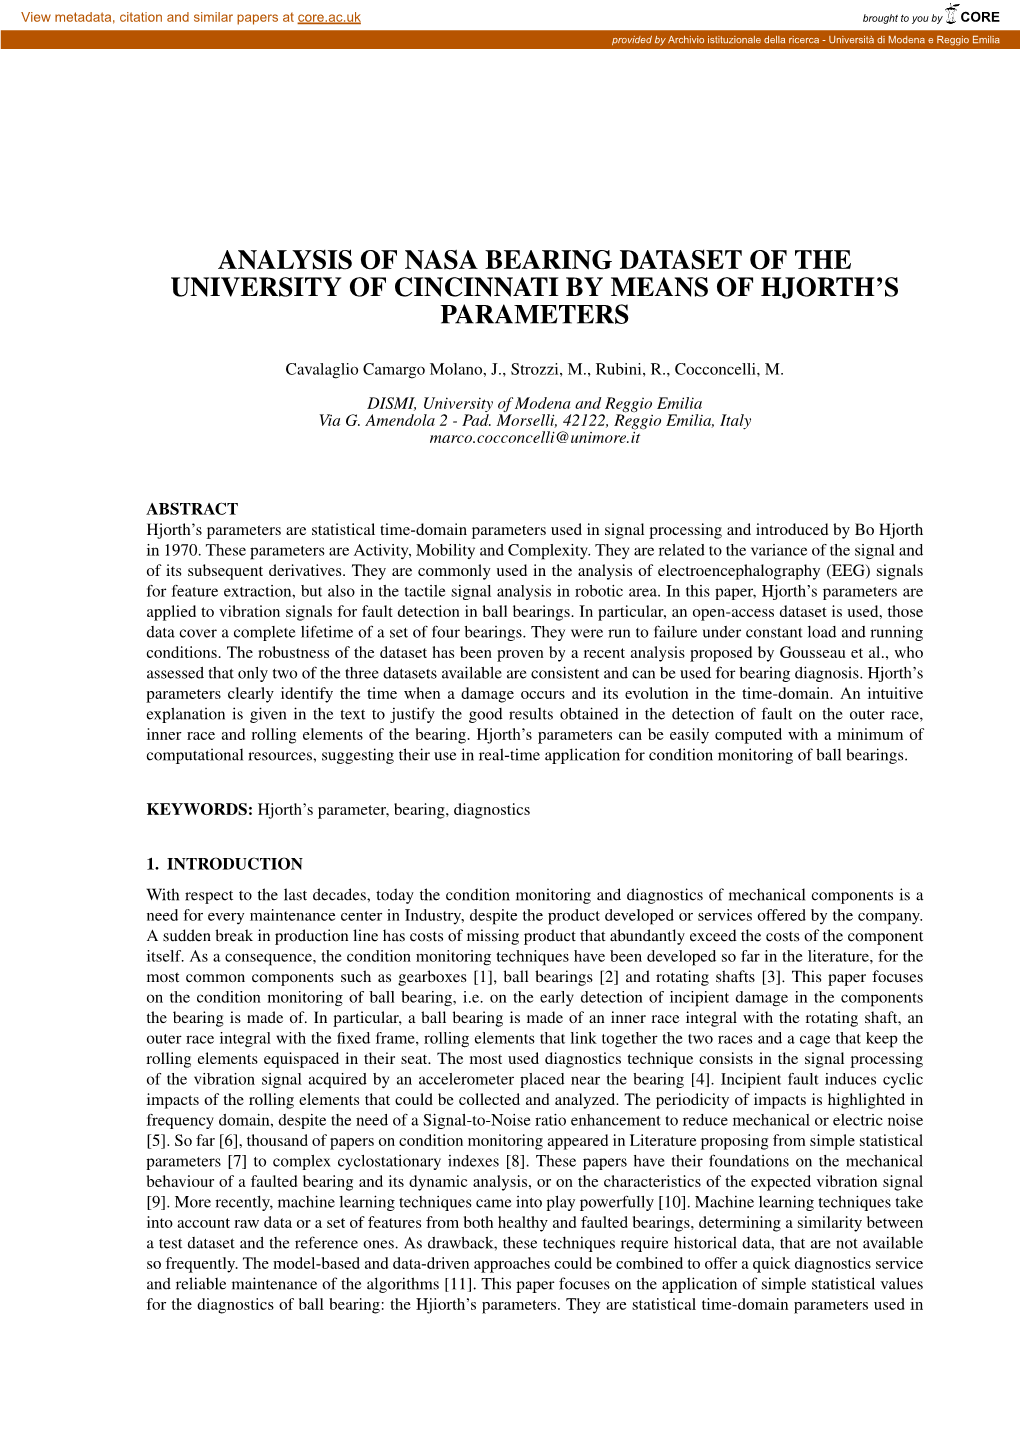 Analysis of Nasa Bearing Dataset of the University of Cincinnati by Means of Hjorth’S Parameters